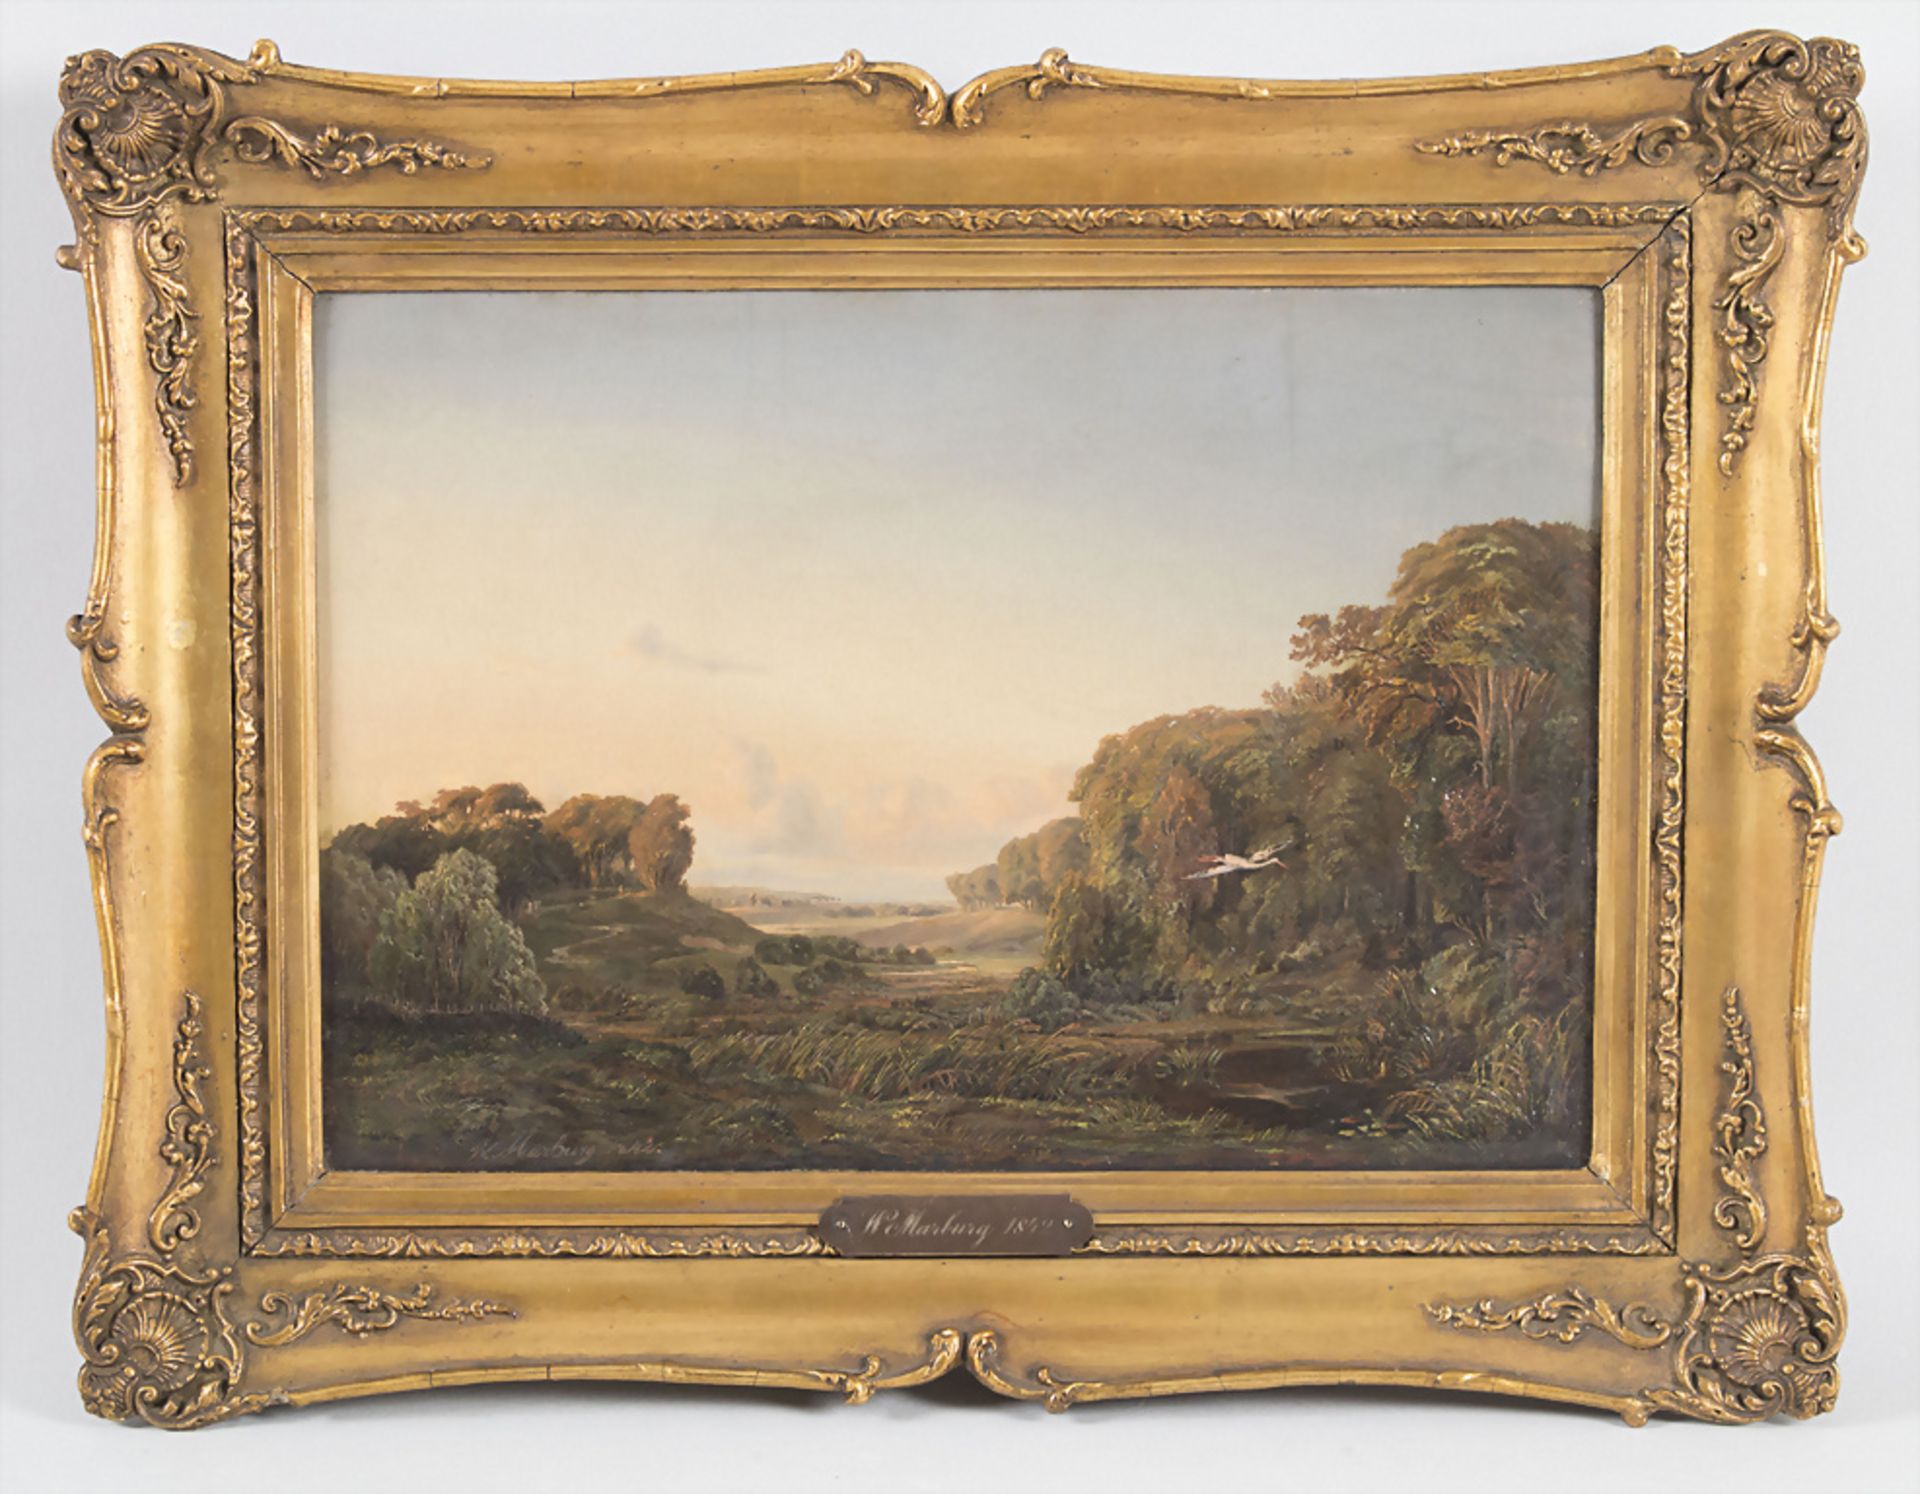 W. MARBURG, Landschaft mit Storch / A landscape with stork, 1842 - Image 2 of 4